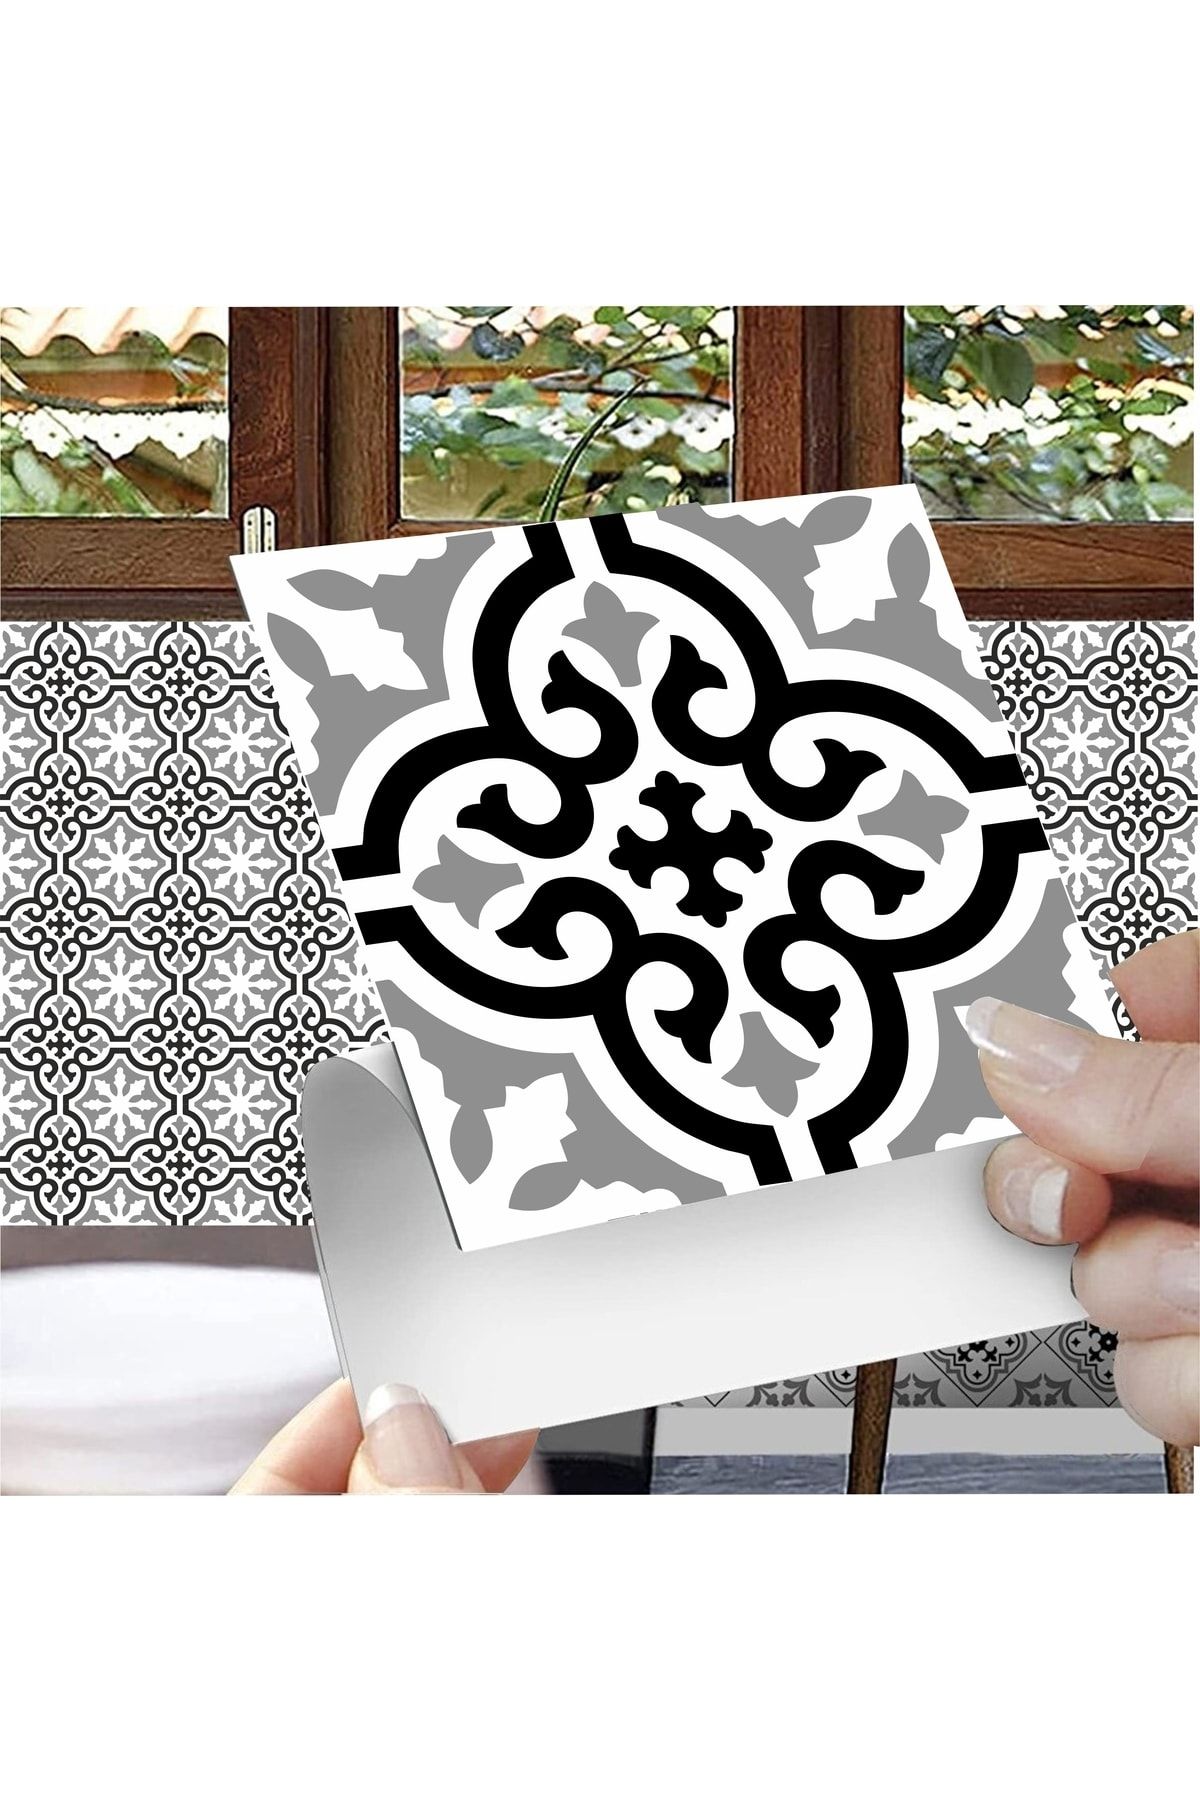 hedefPLUS Muftak Banyo Fayans Kaplama Duvar Dekorasyon Sticker Folyo 15x15cm